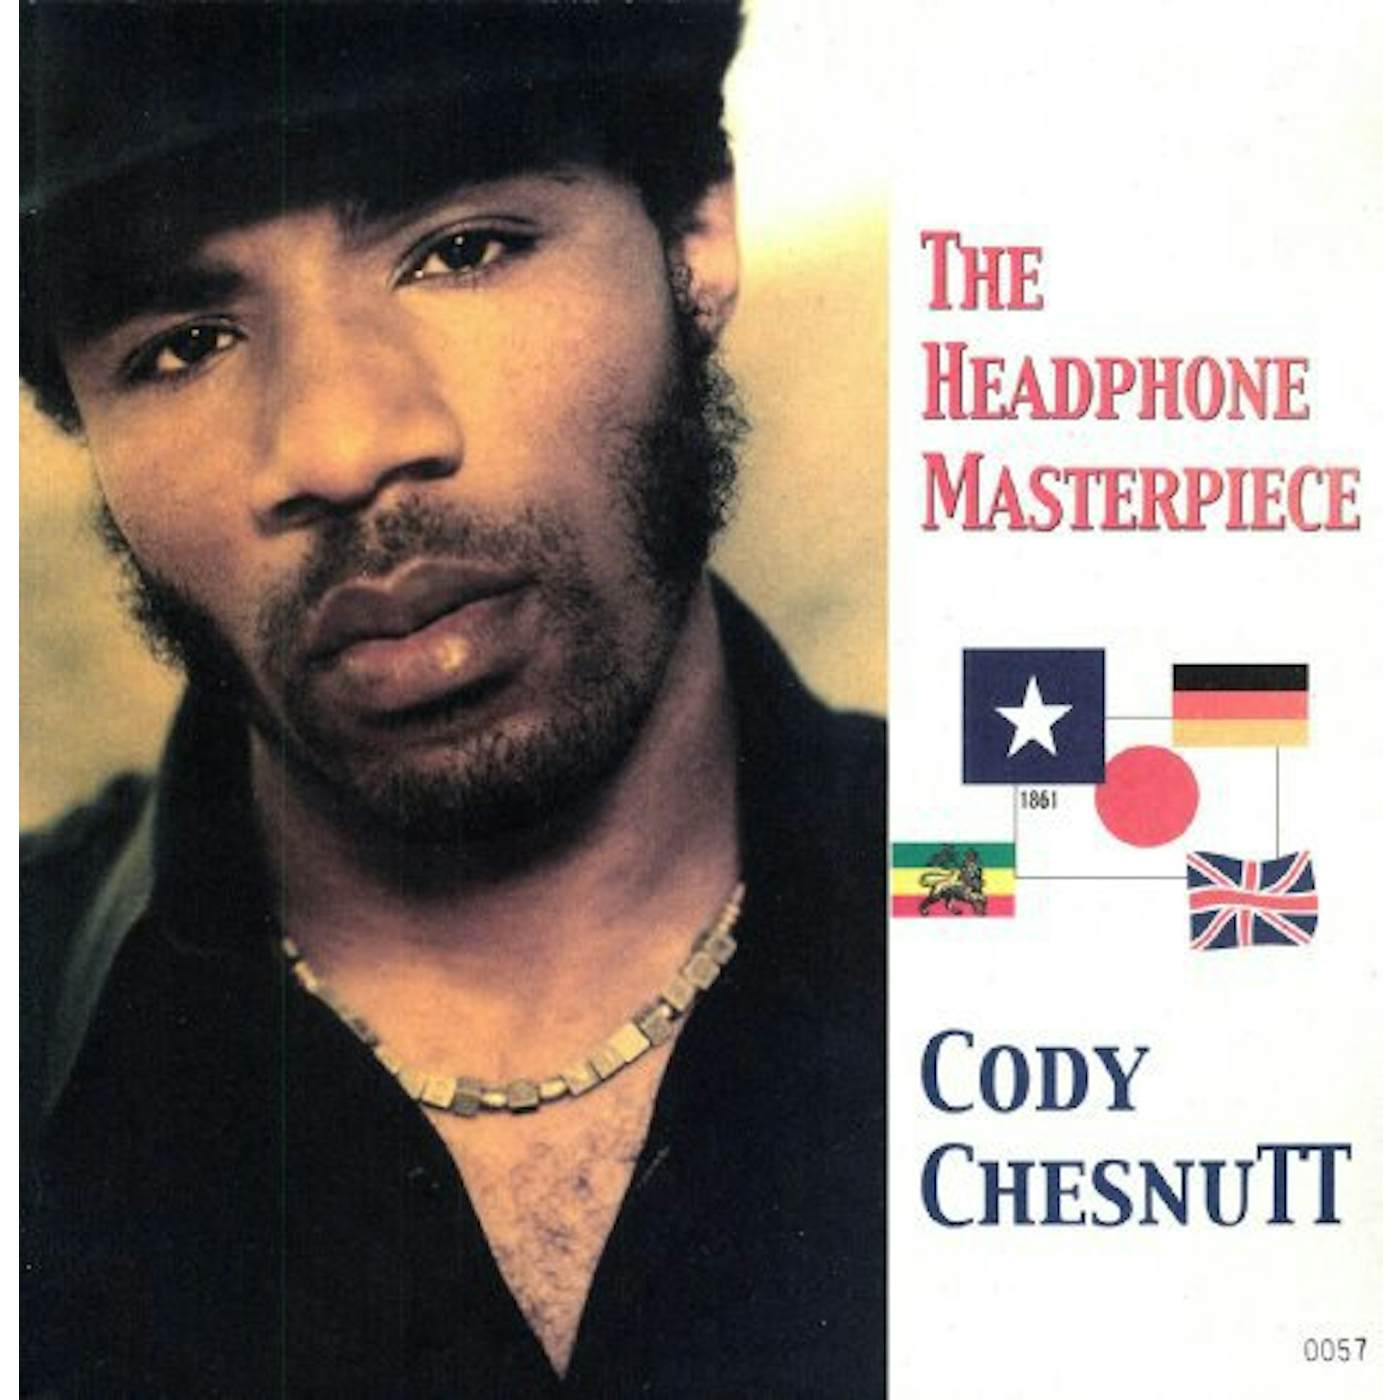 Cody Chesnutt HEADPHONE MASTERPIECE Vinyl Record